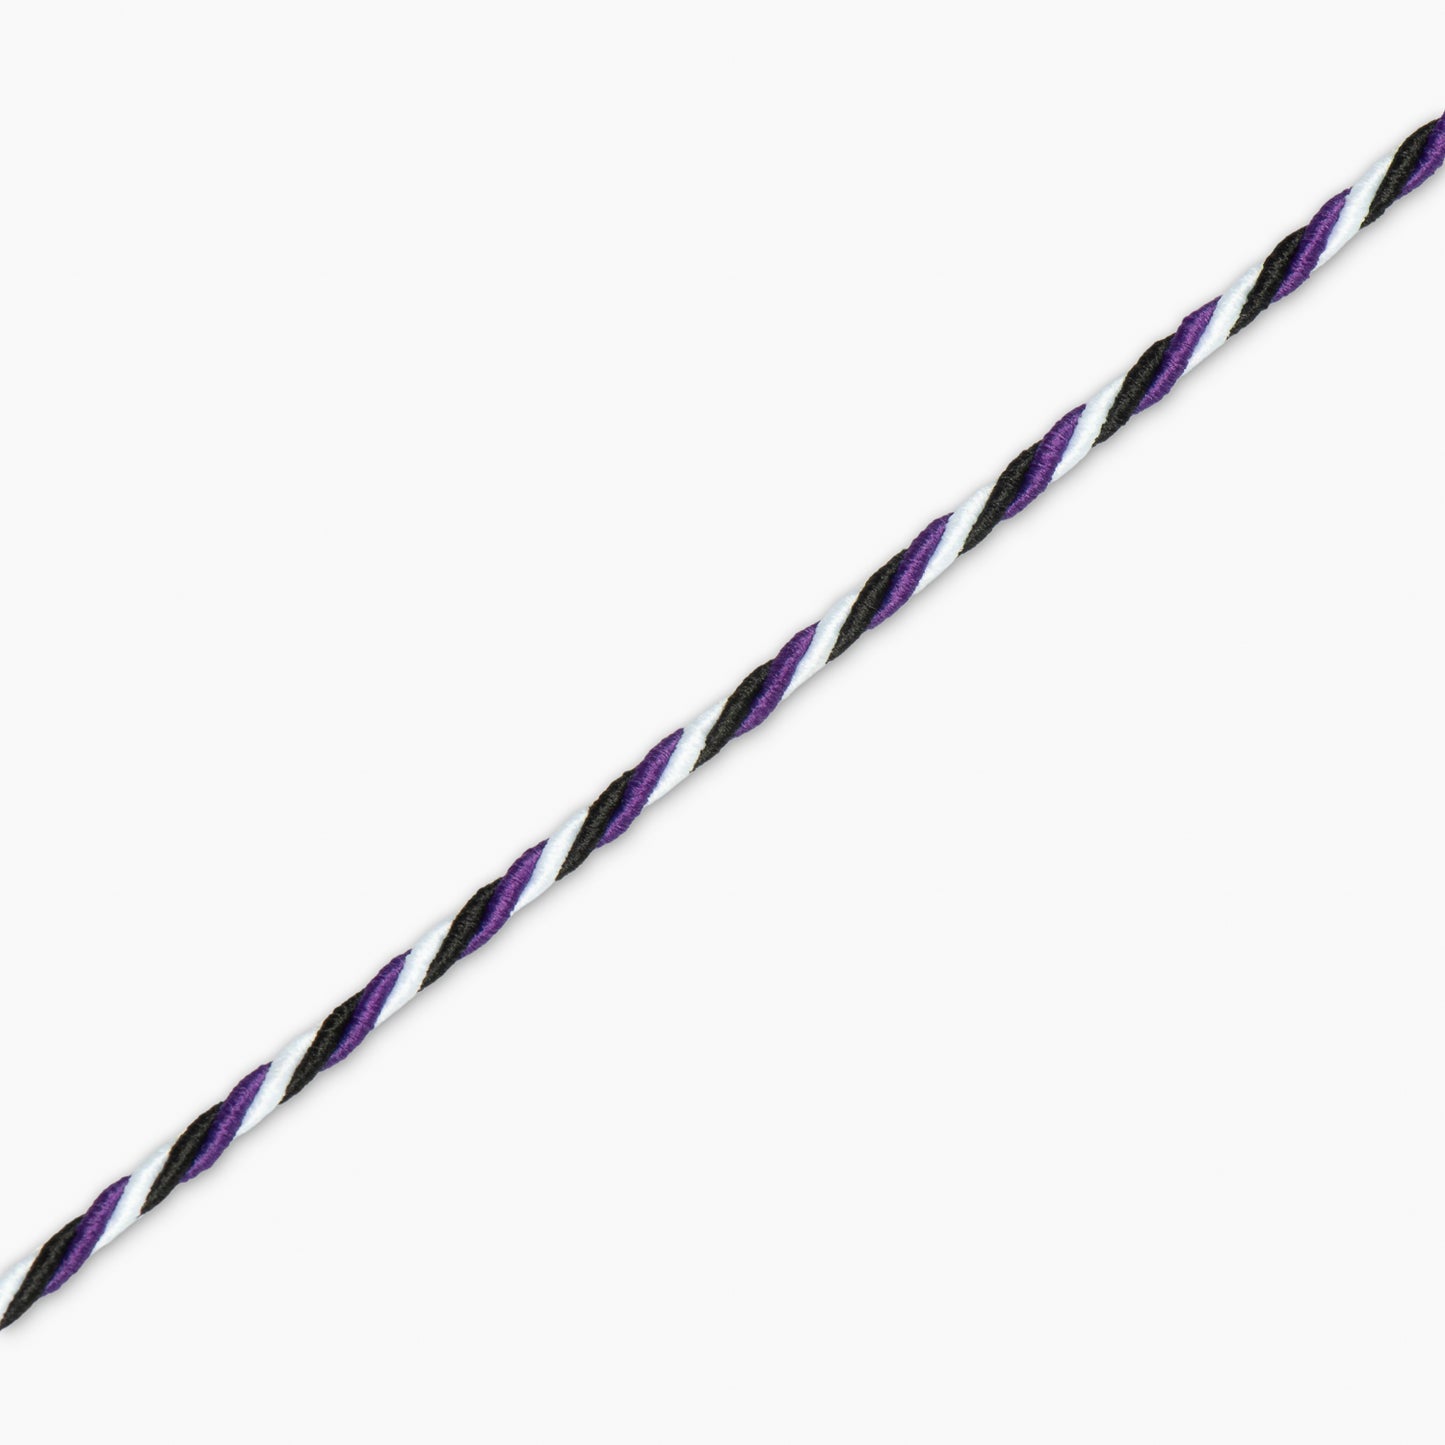 Blazer Cord - Purple/Black/White Twist